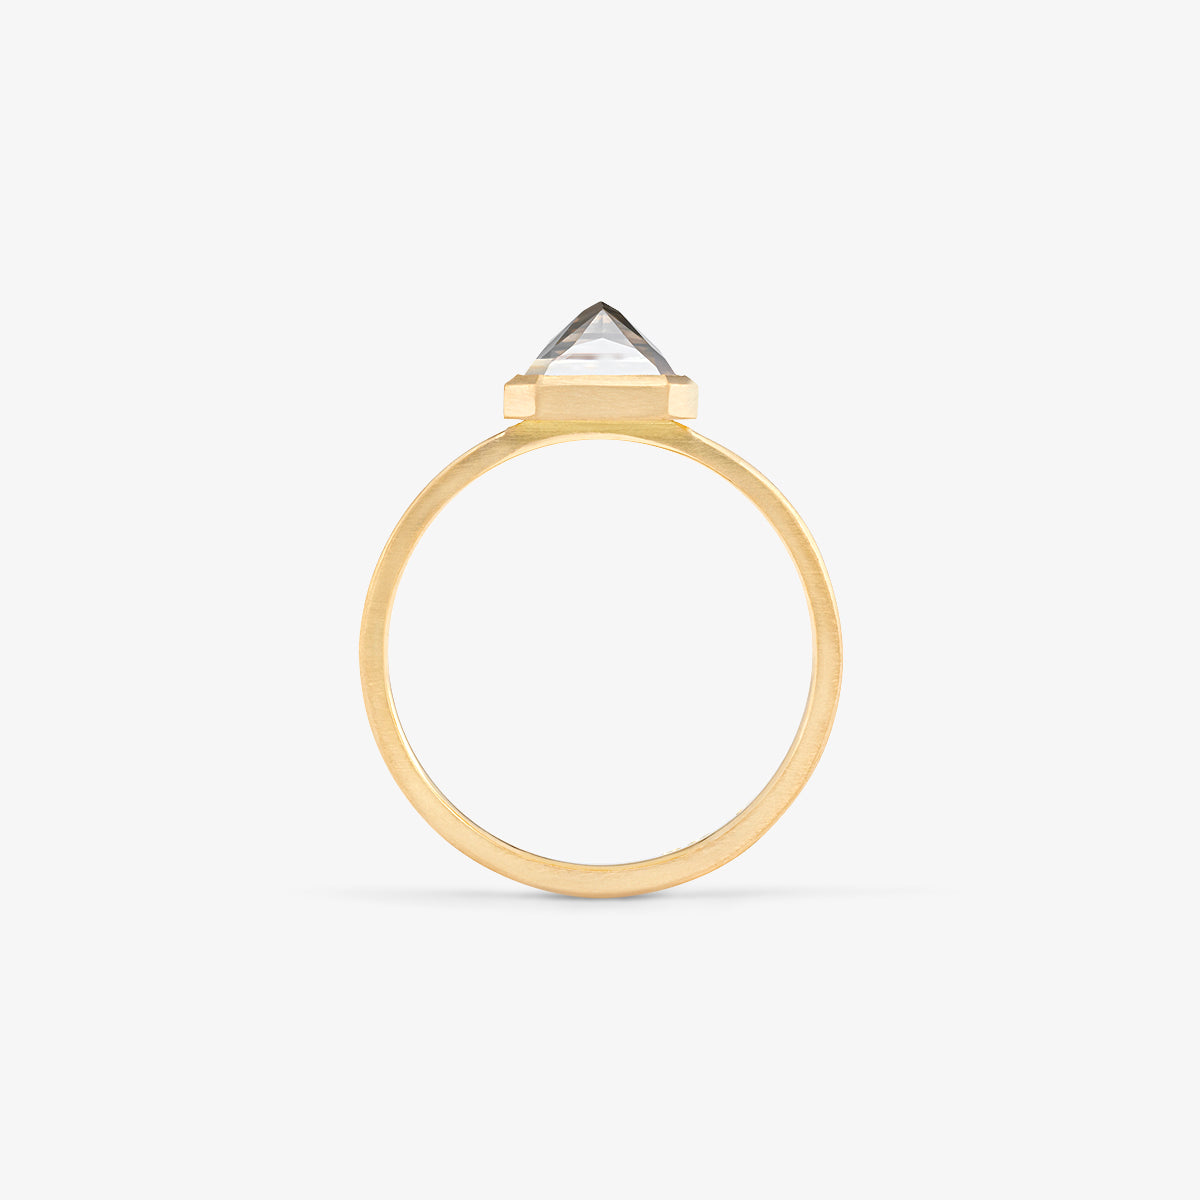 1.82 Carat One-of-a-Kind Mogul Cut Diamond Ring